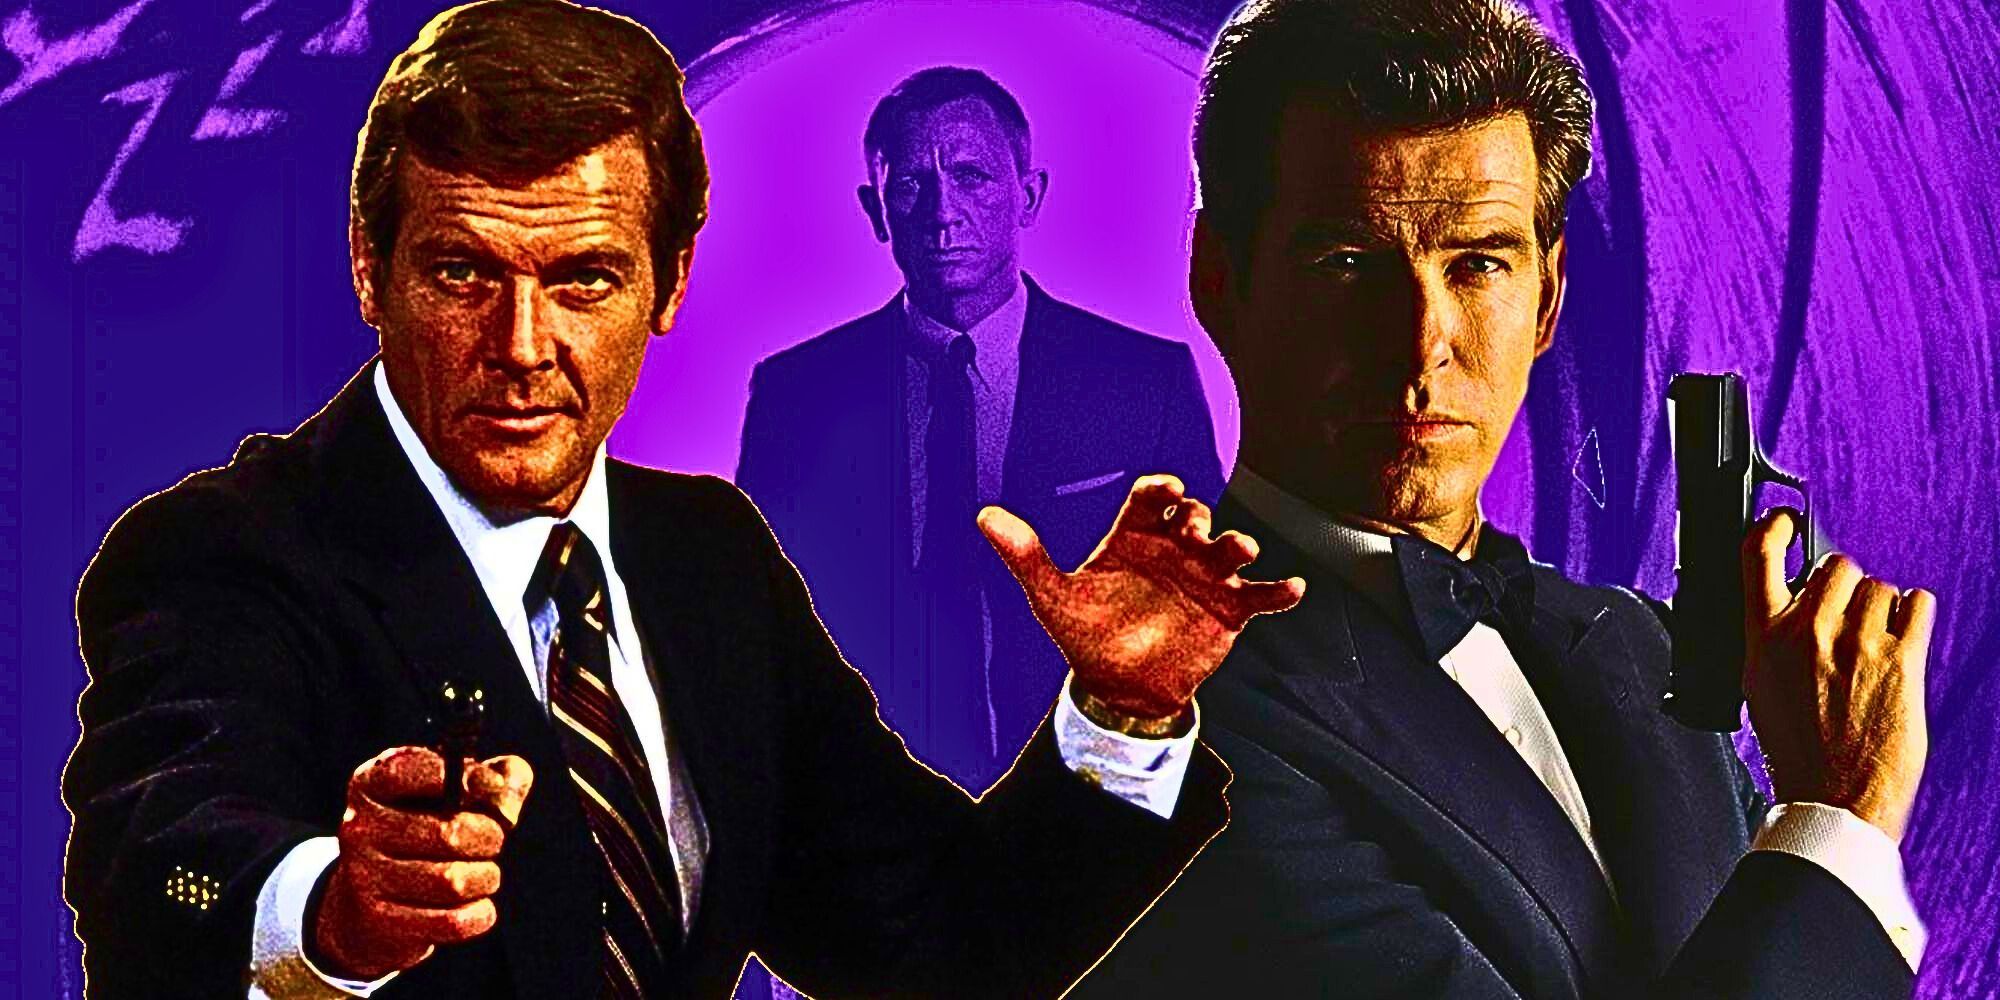 Custom James Bond image of Daniel Craig, Roger Moore, and Pierce Brosnan